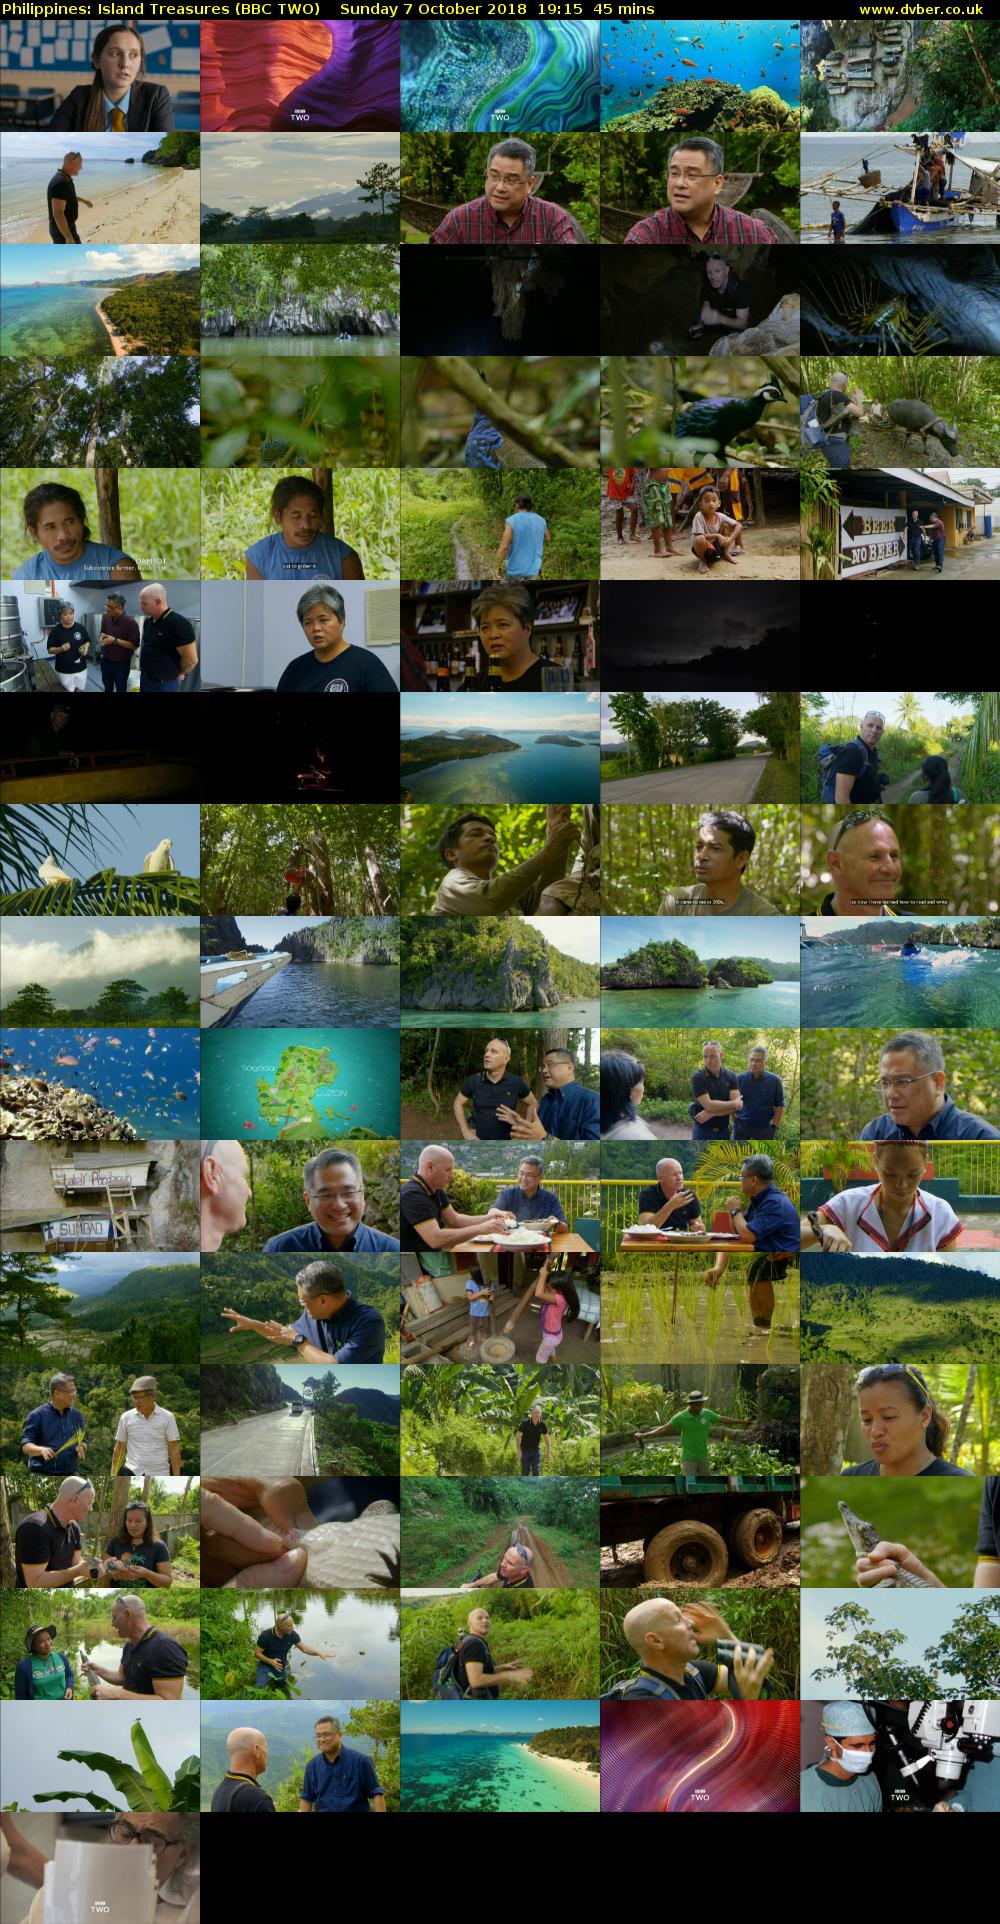 Philippines: Island Treasures (BBC TWO) Sunday 7 October 2018 19:15 - 20:00